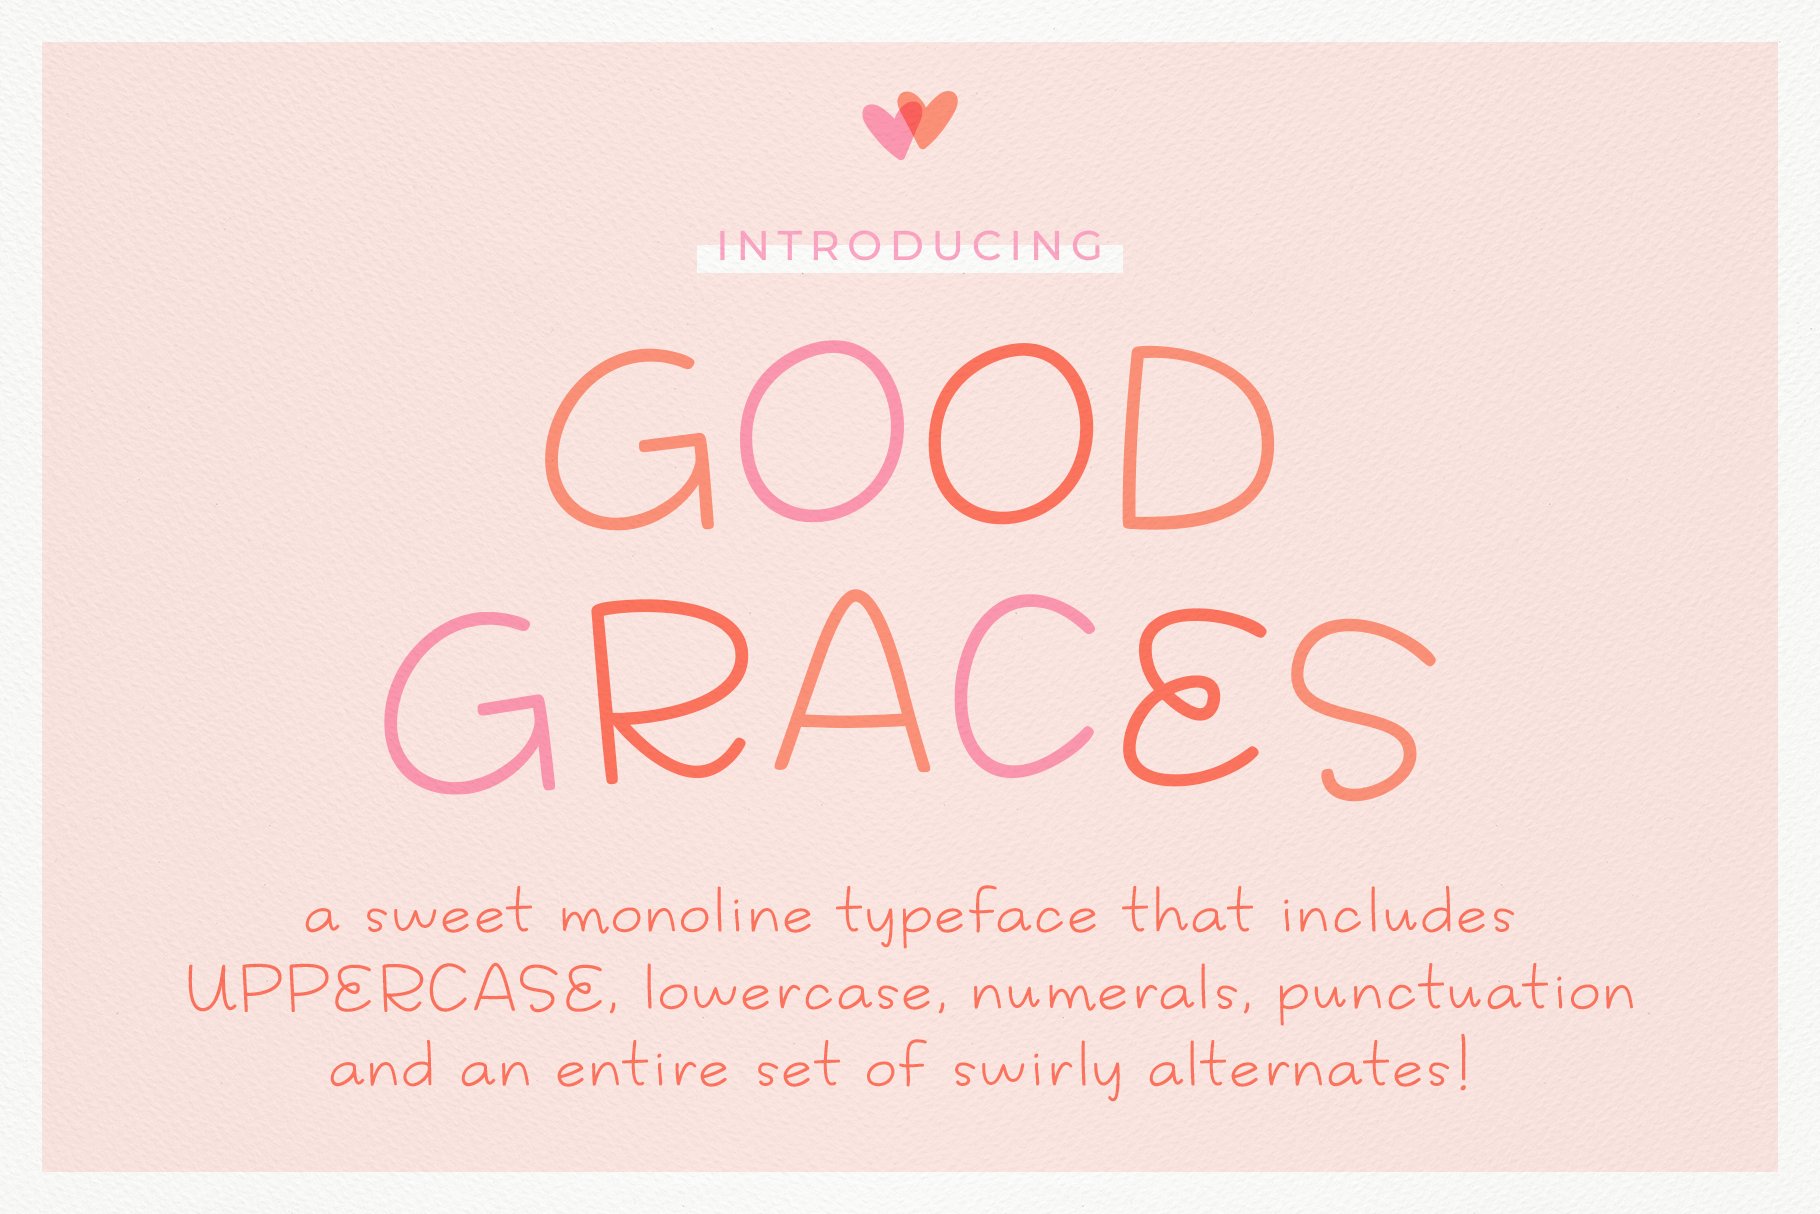 Good Graces |  a cute & playful font cover image.